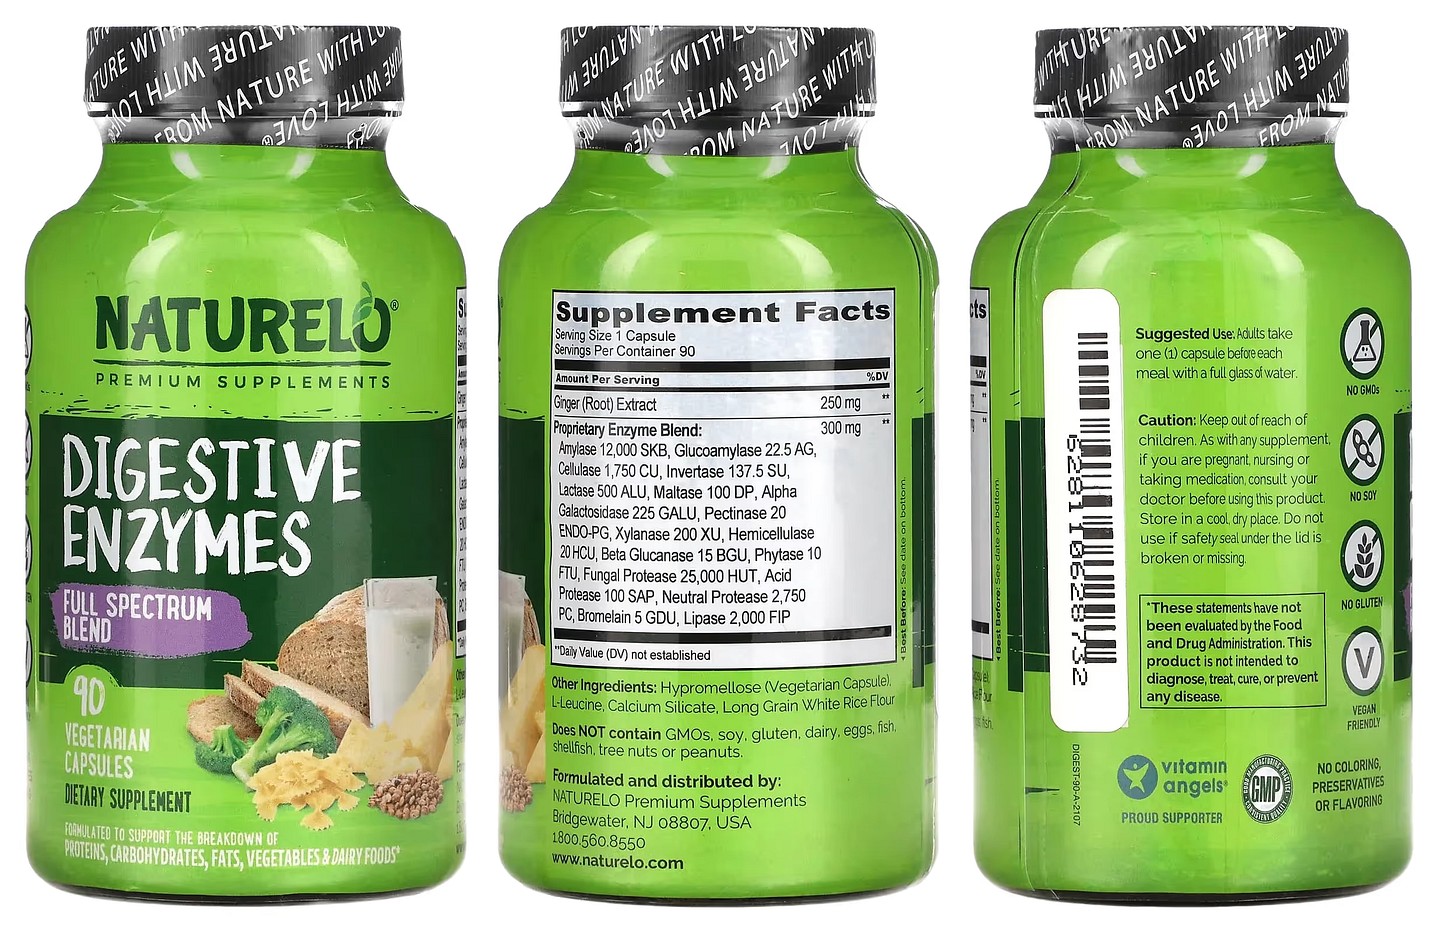 NATURELO, Digestive Enzymes packaging